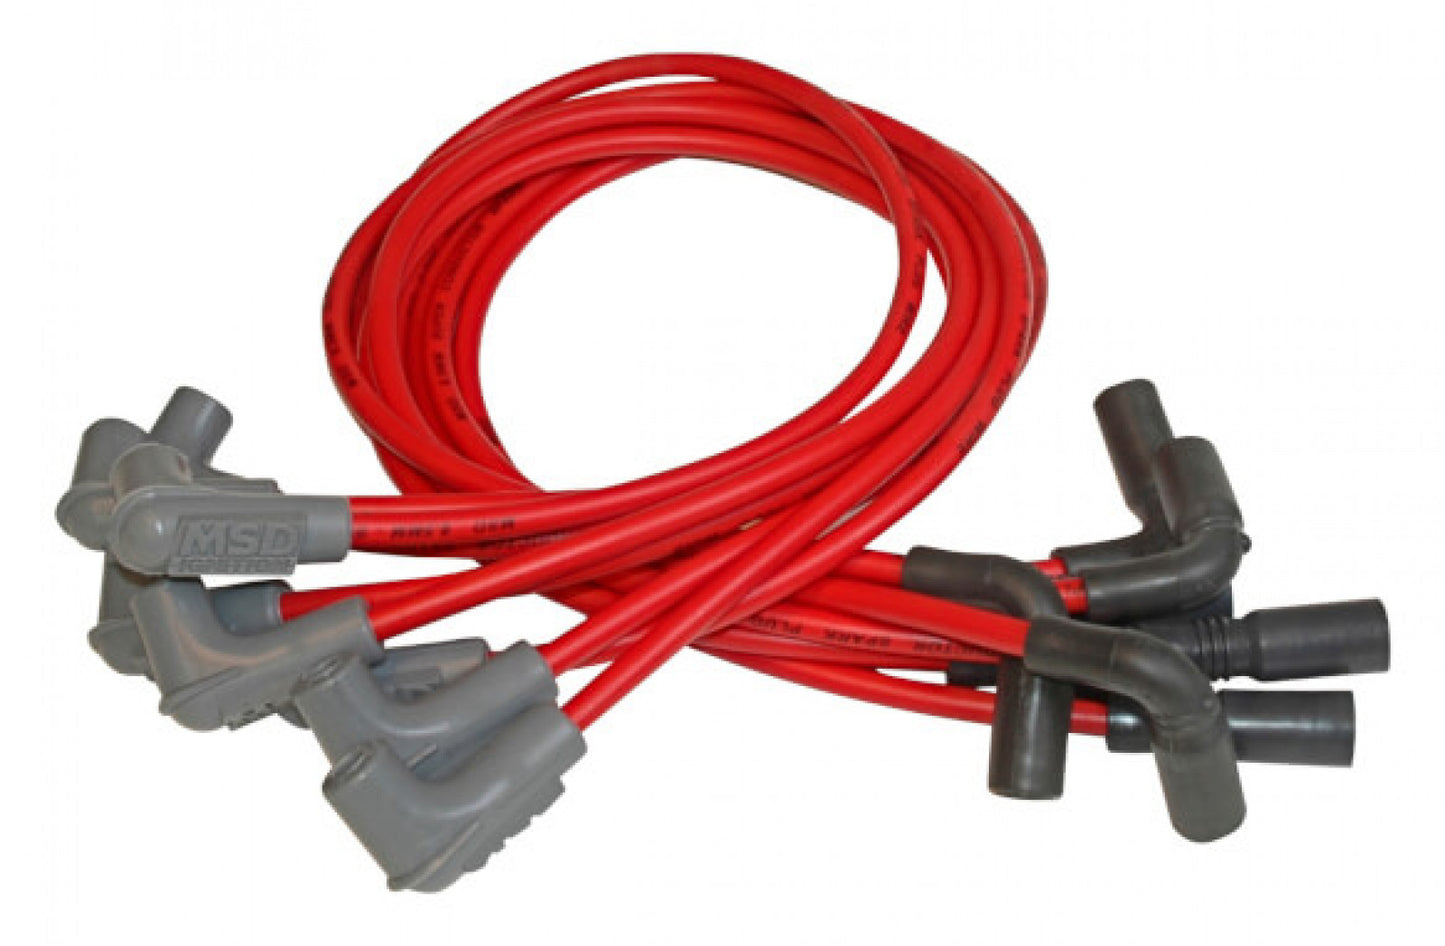 MSD Super Conductor Spark Plug Wire Set, Caprice/Impala,LT1 5.7/4.3 '94-'96 '32159